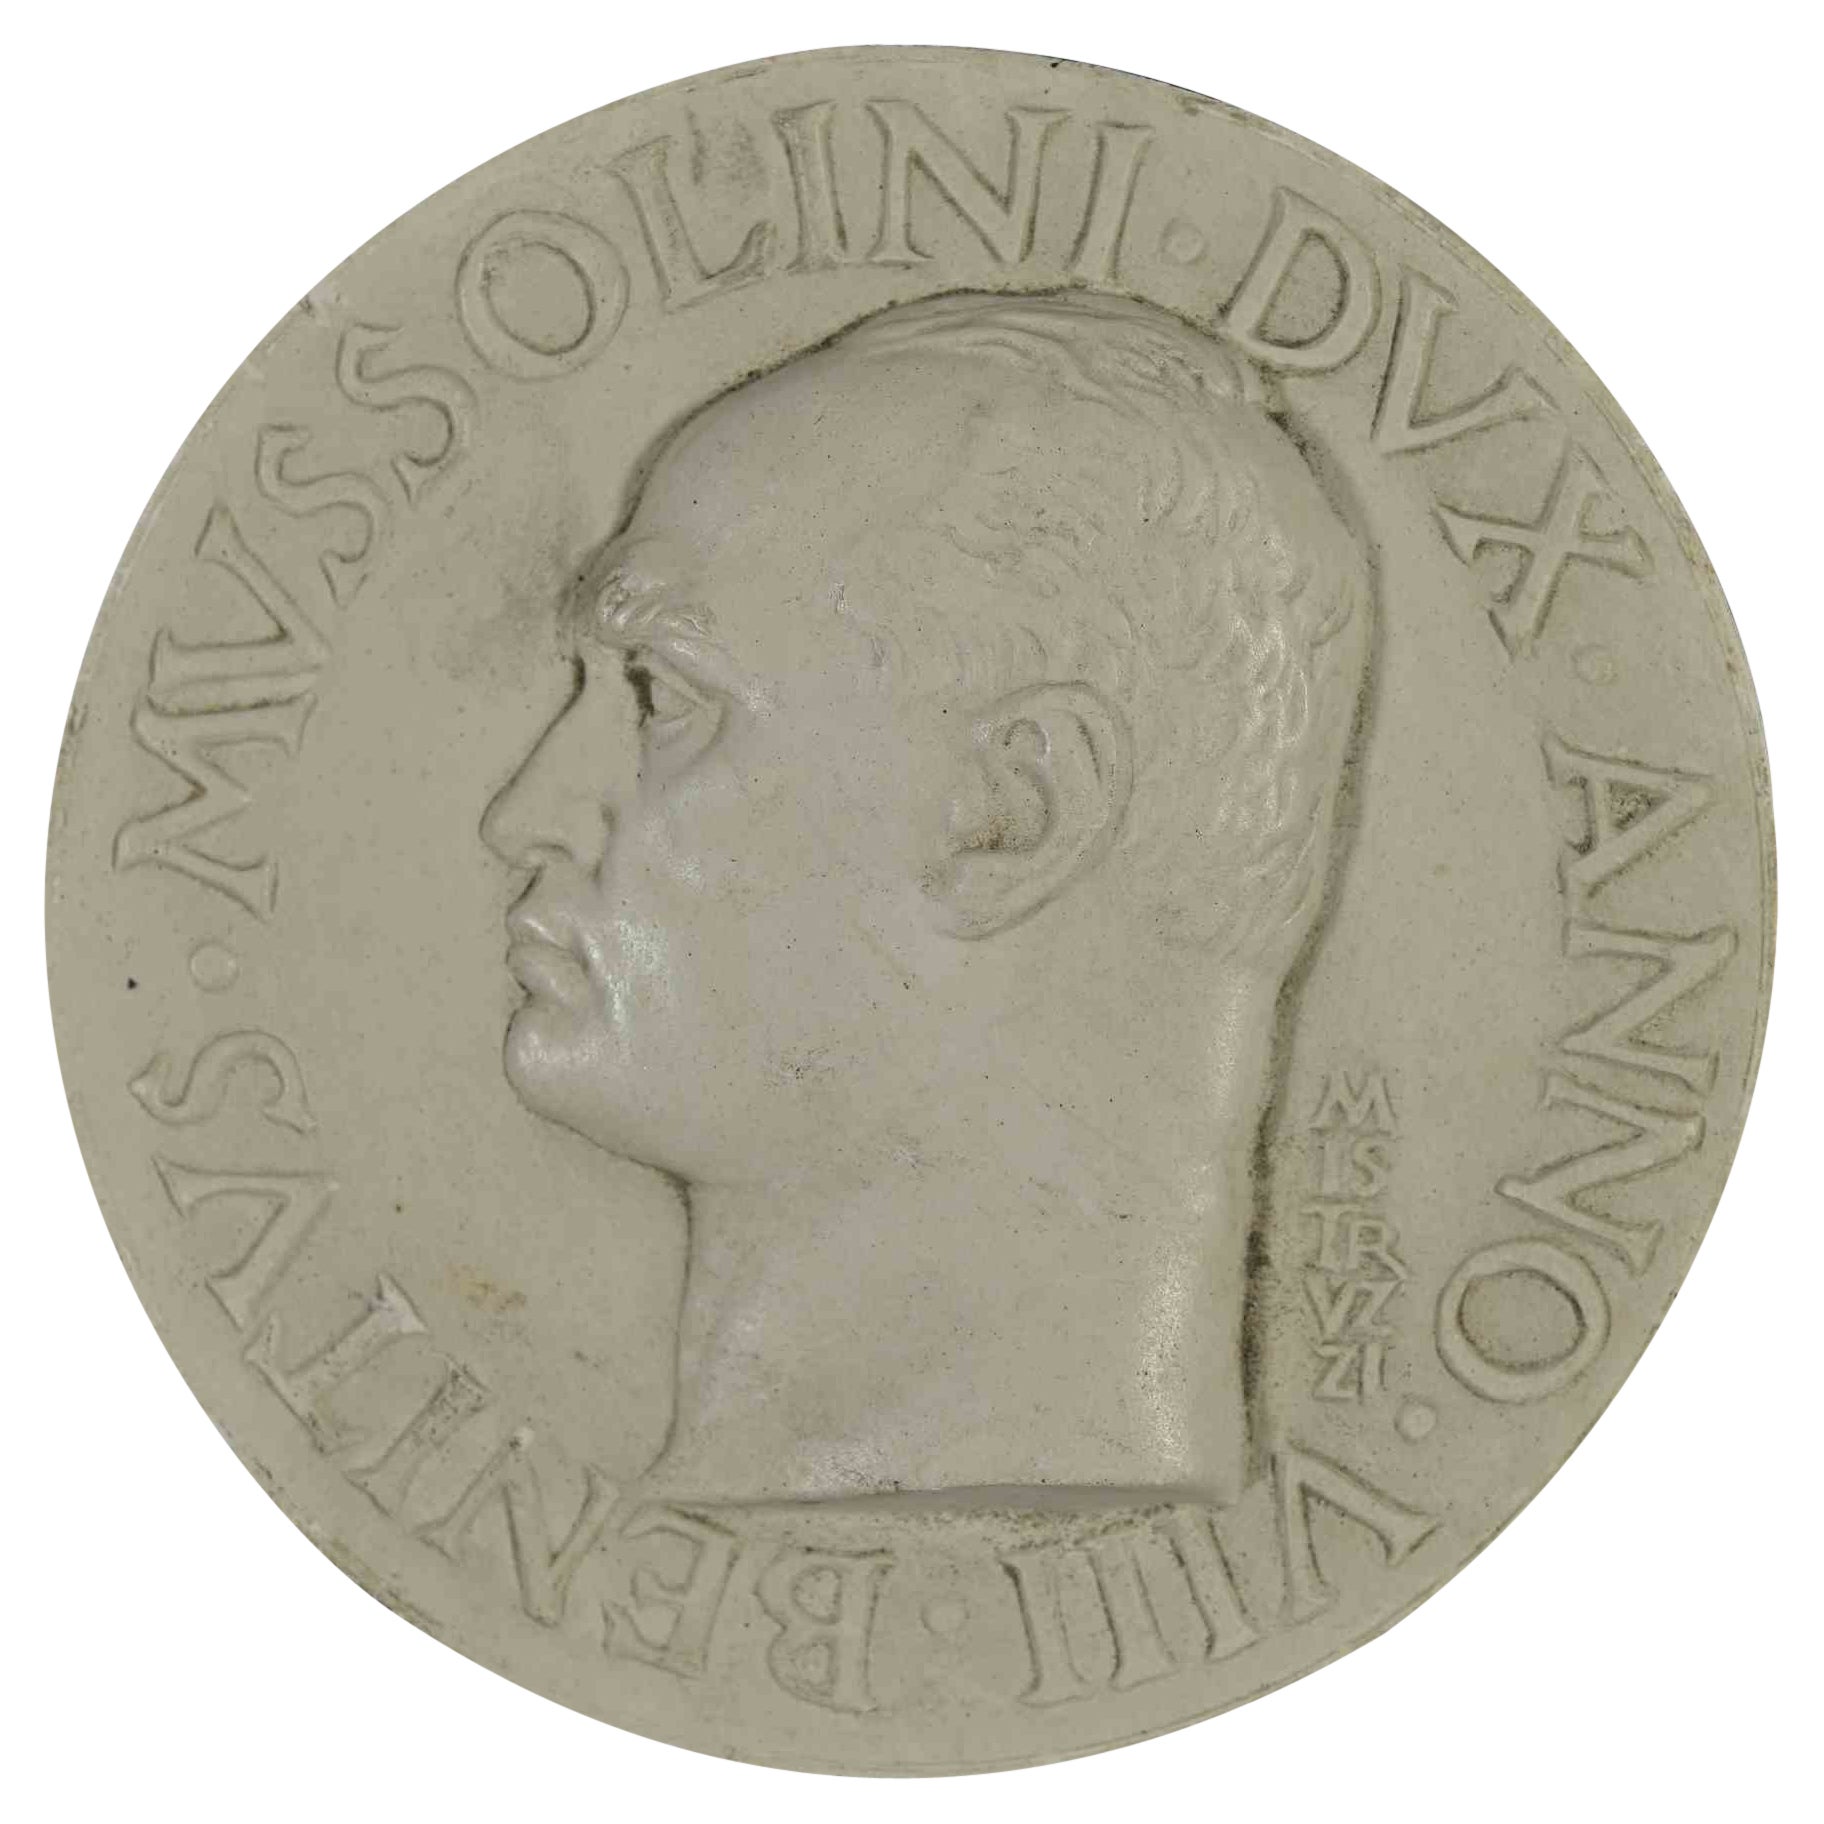 Plastel Medal of Mussolini by Aurelio Mistruzzi, 1930s